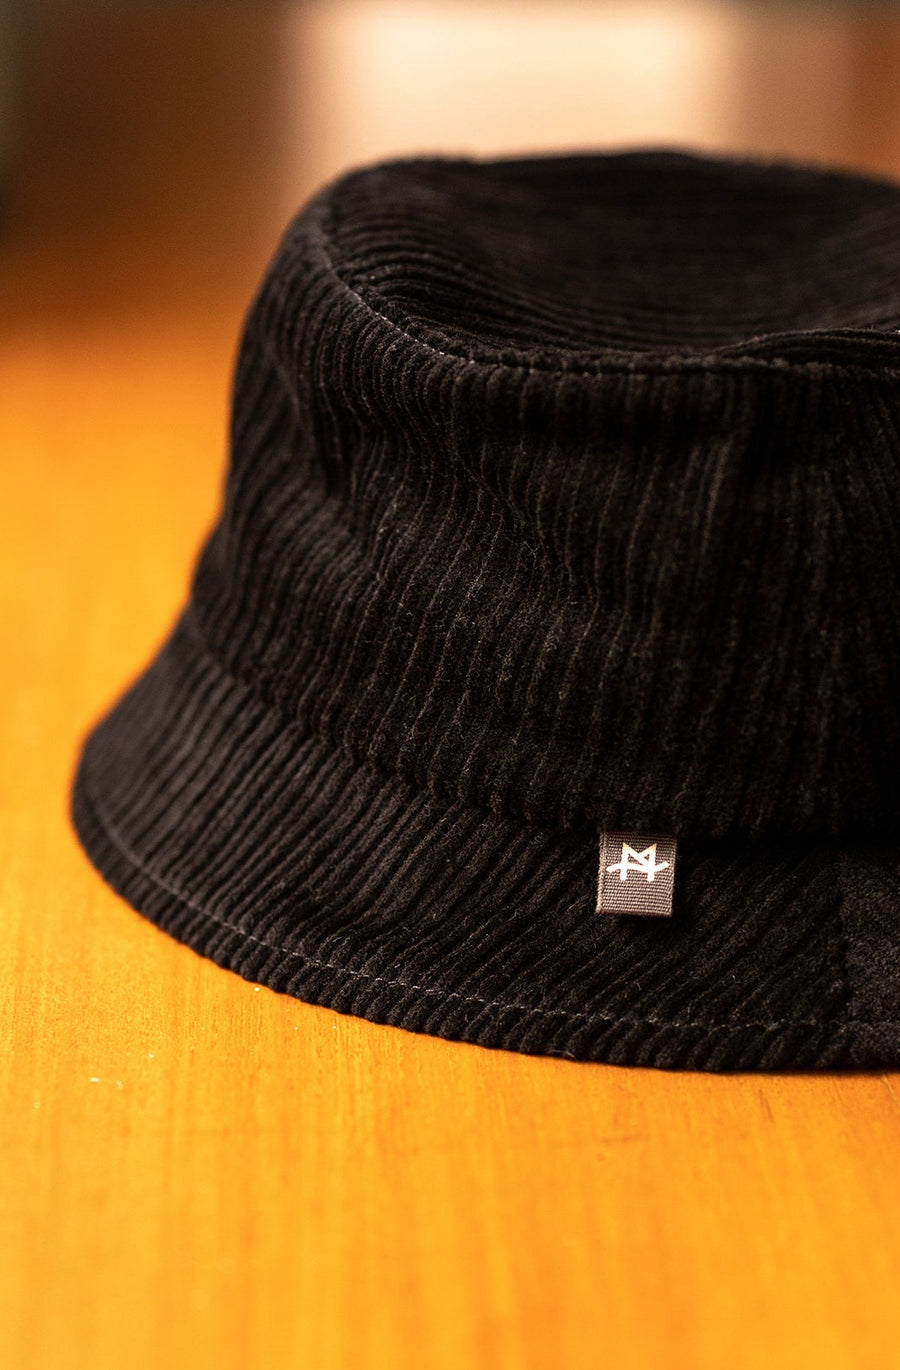 Black corduroy bucket hat